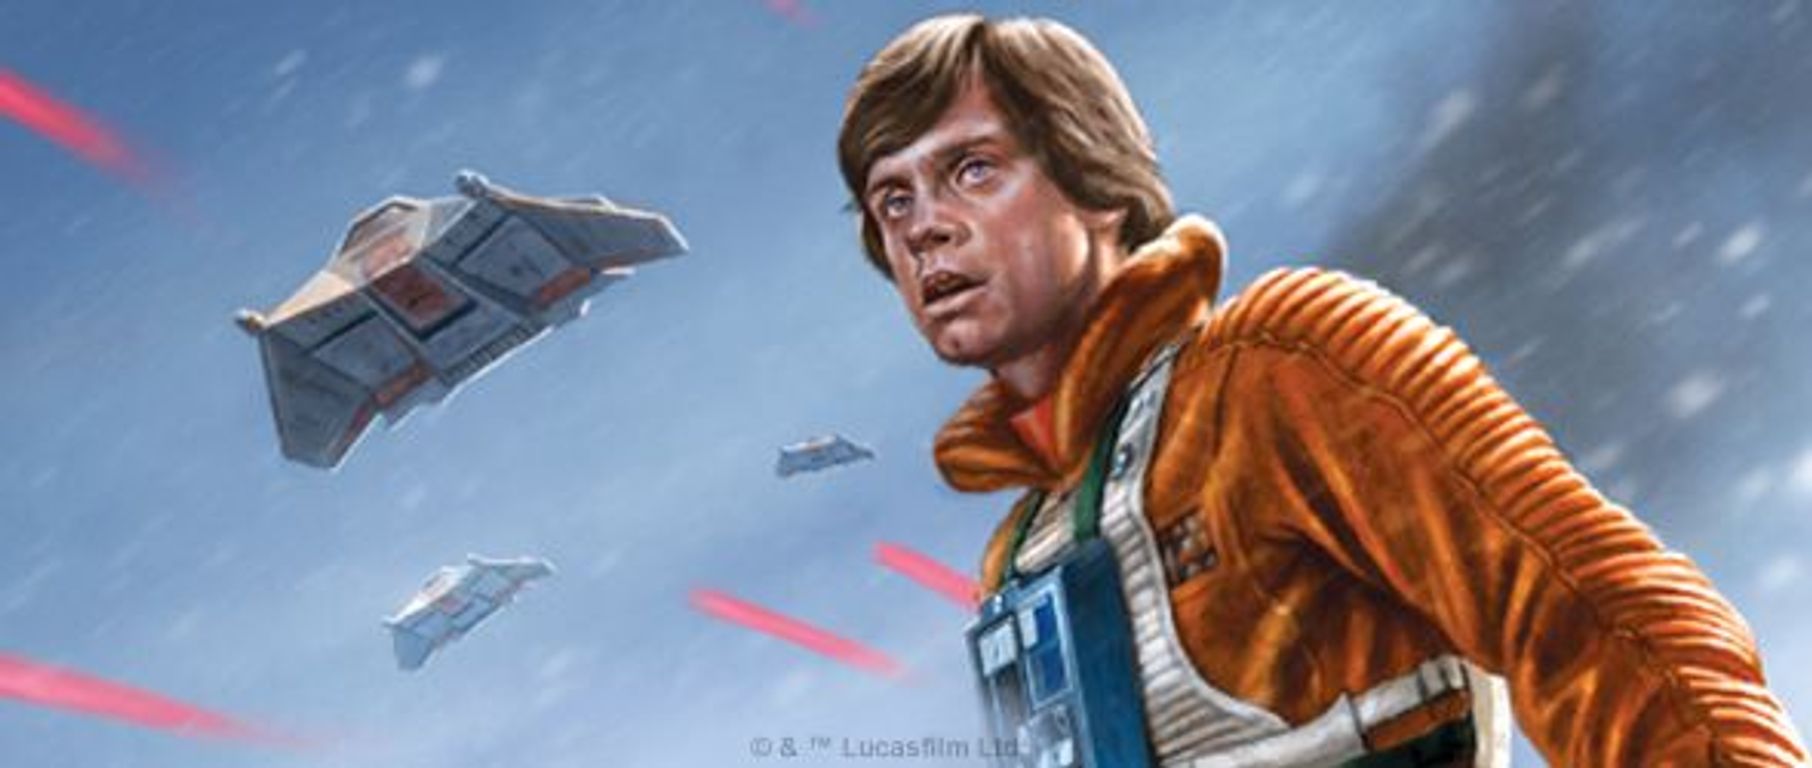 Star Wars: Legion – Limited Edition Luke Skywalker Commander Expansion